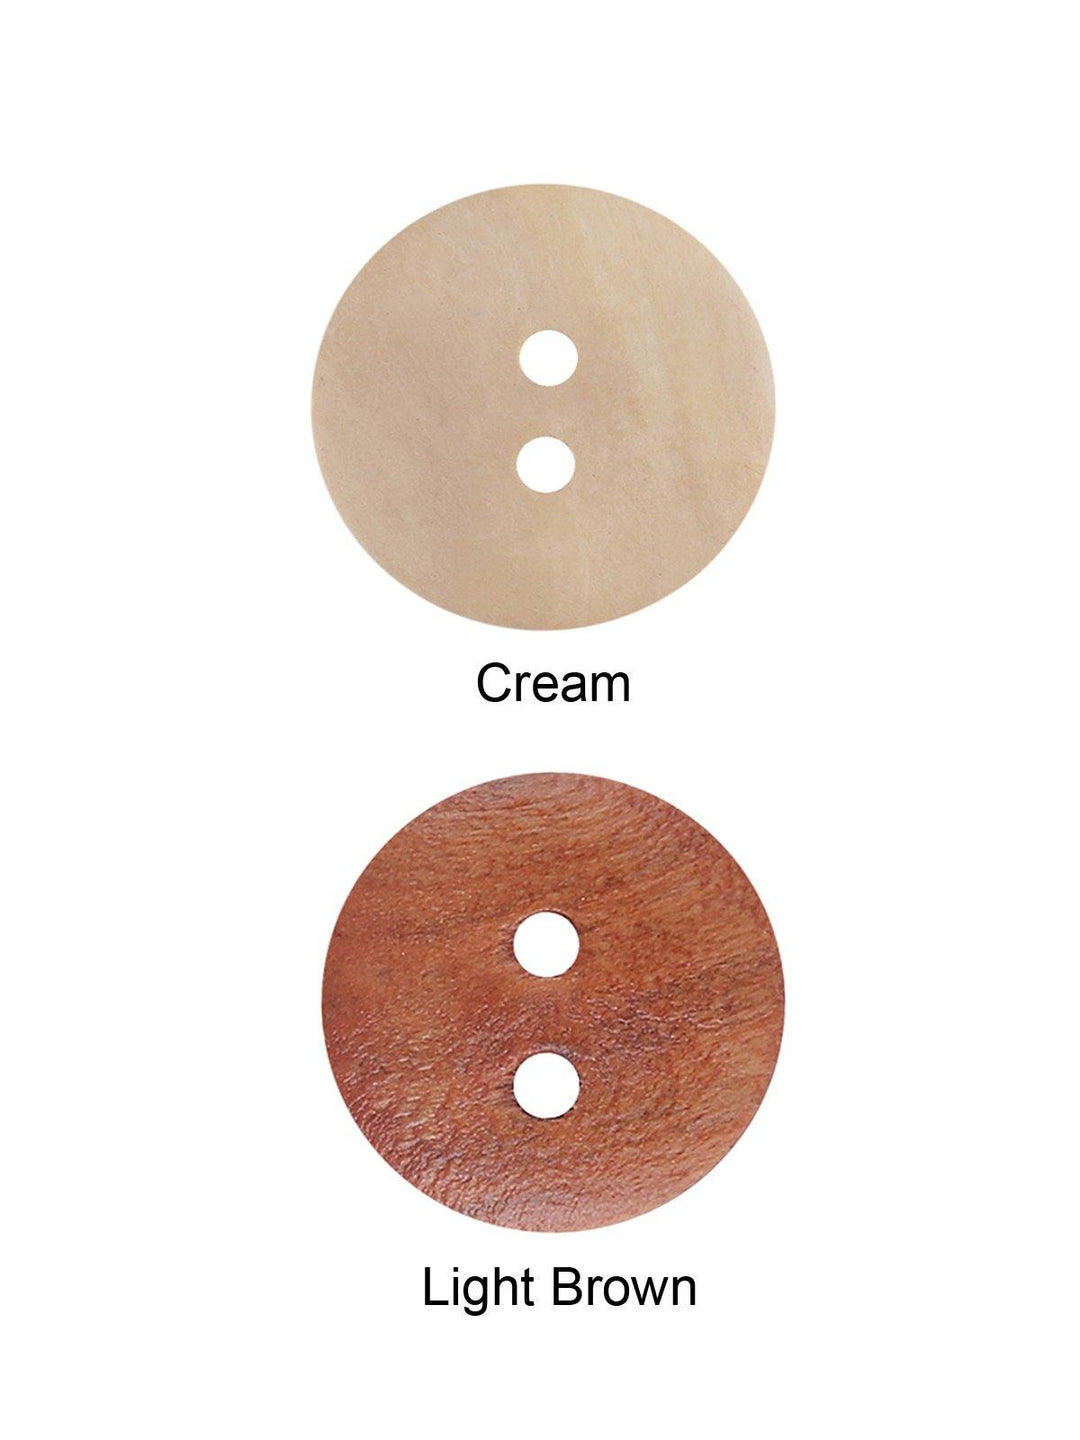 Round Shape 2-Hole Fashionable Wooden Dome Button - Jhonea Accessories